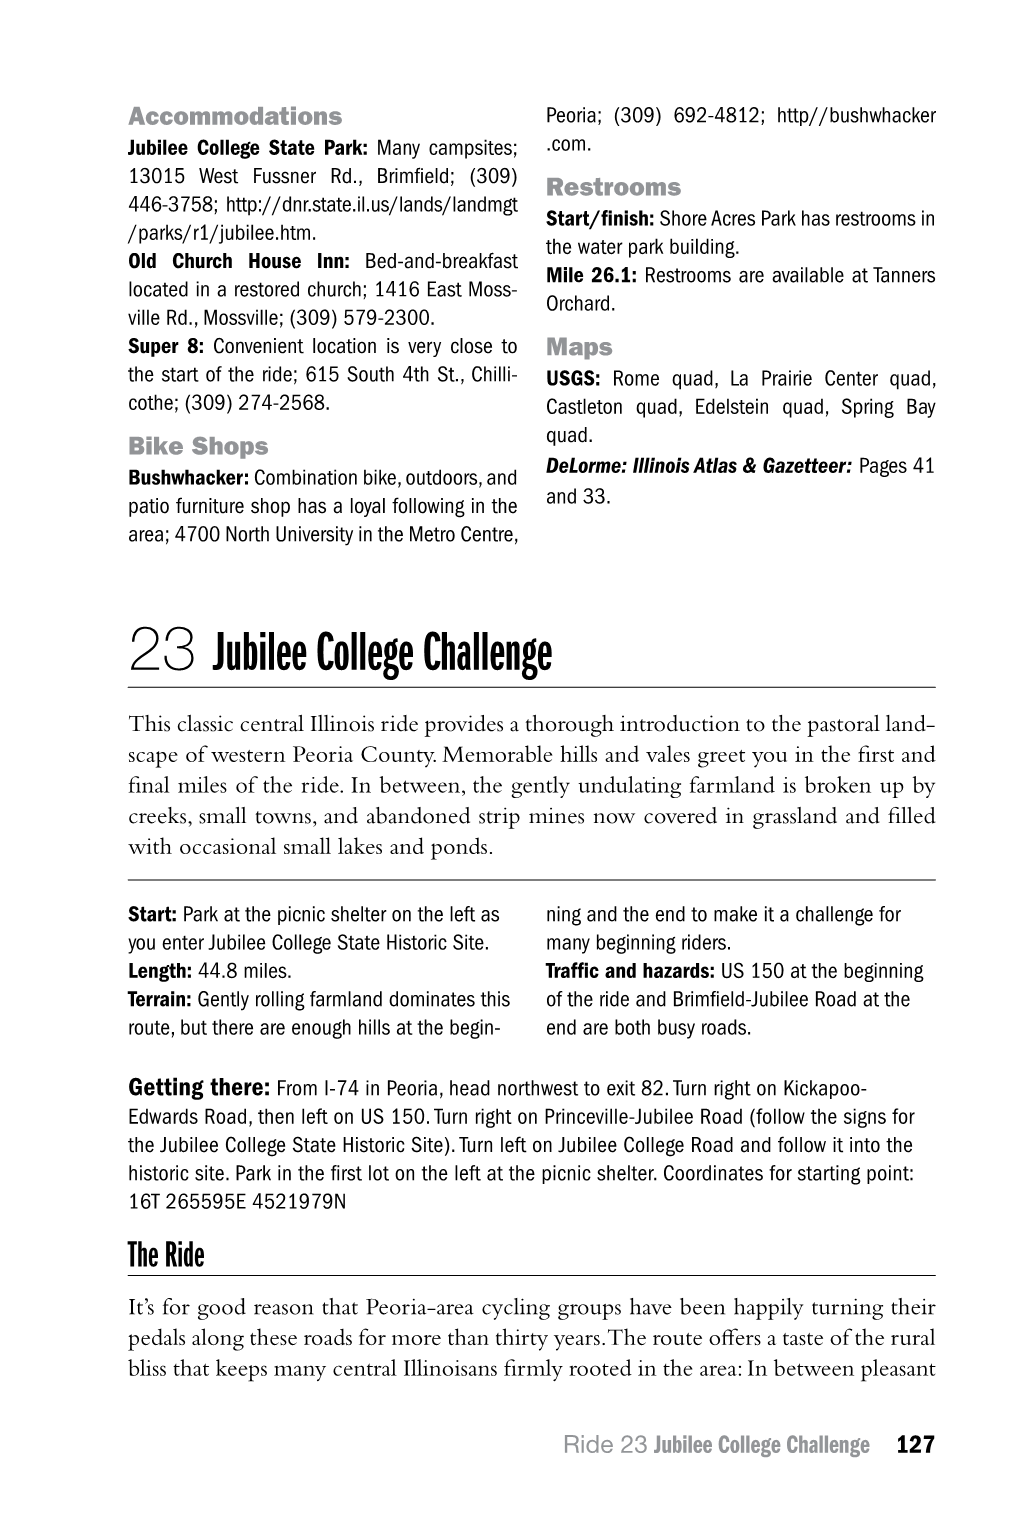 23 Jubilee College Challenge